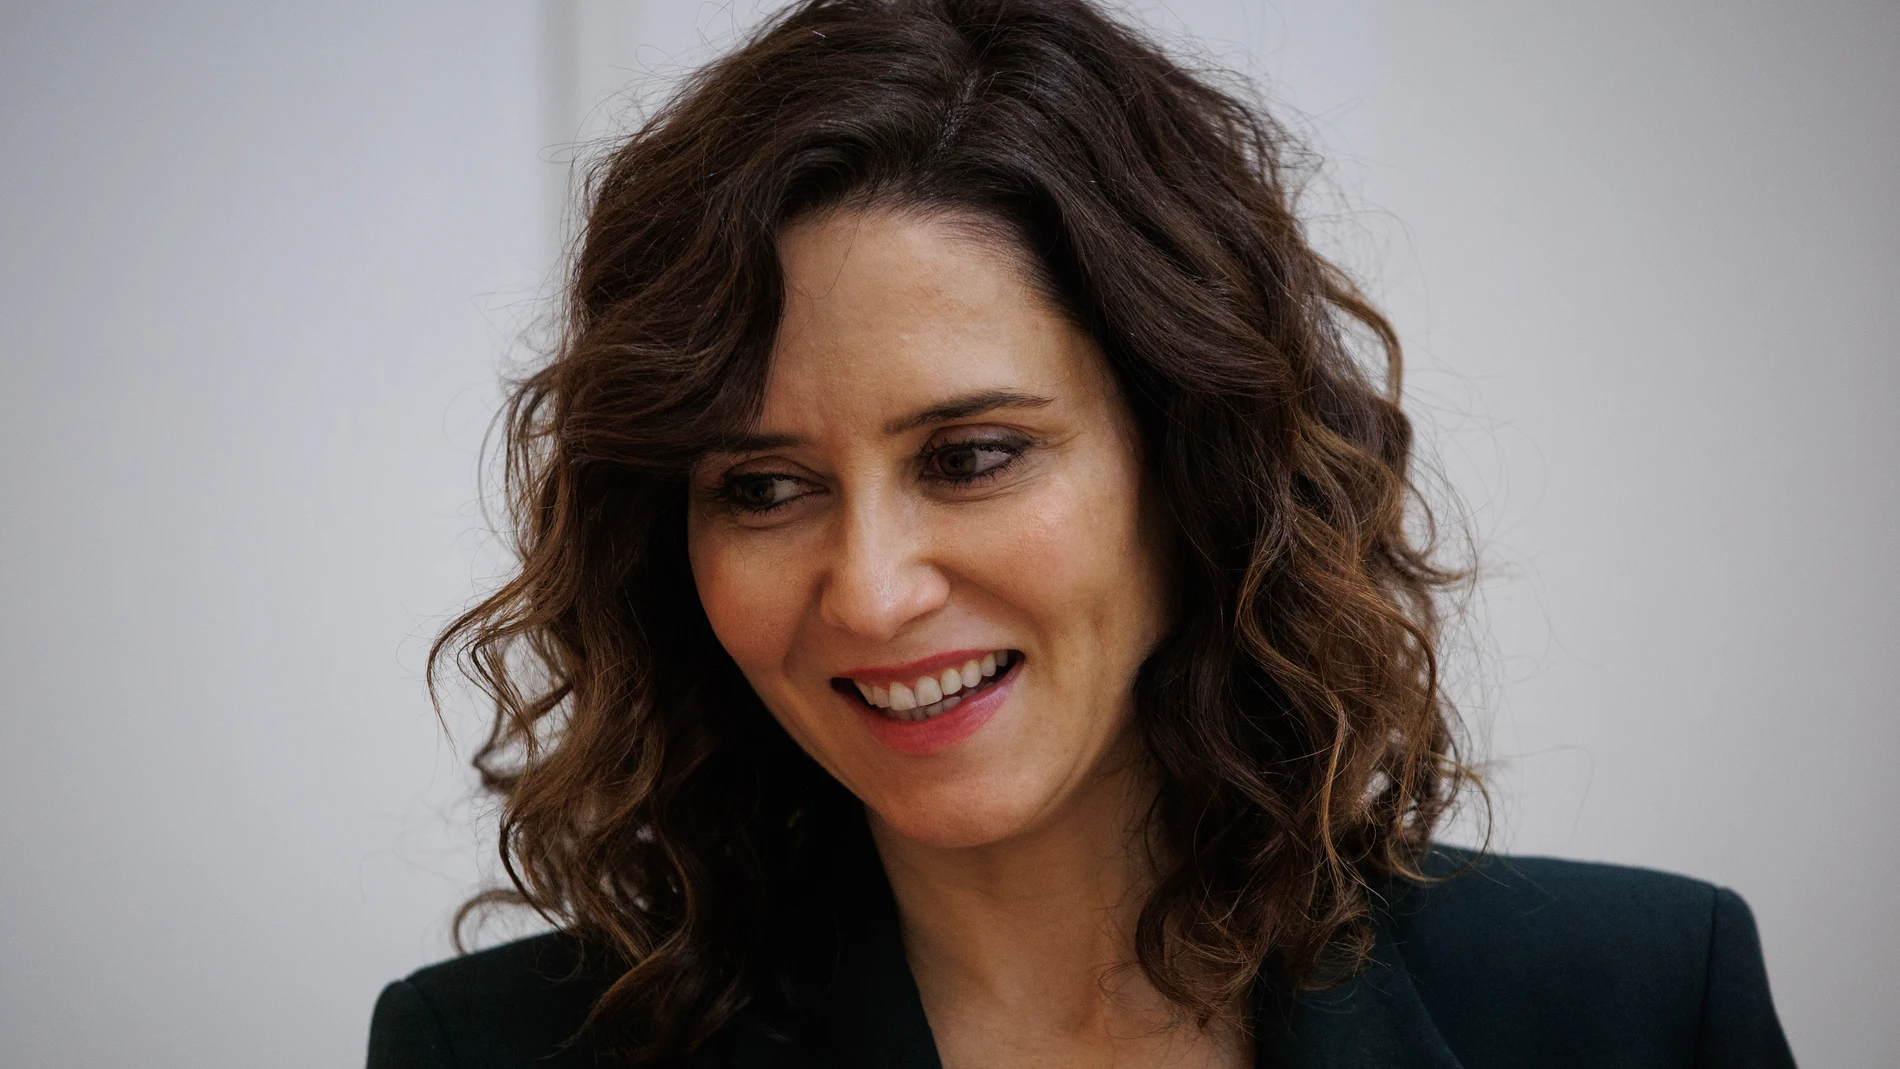 La presidenta madrileña, Isabel Díaz Ayuso